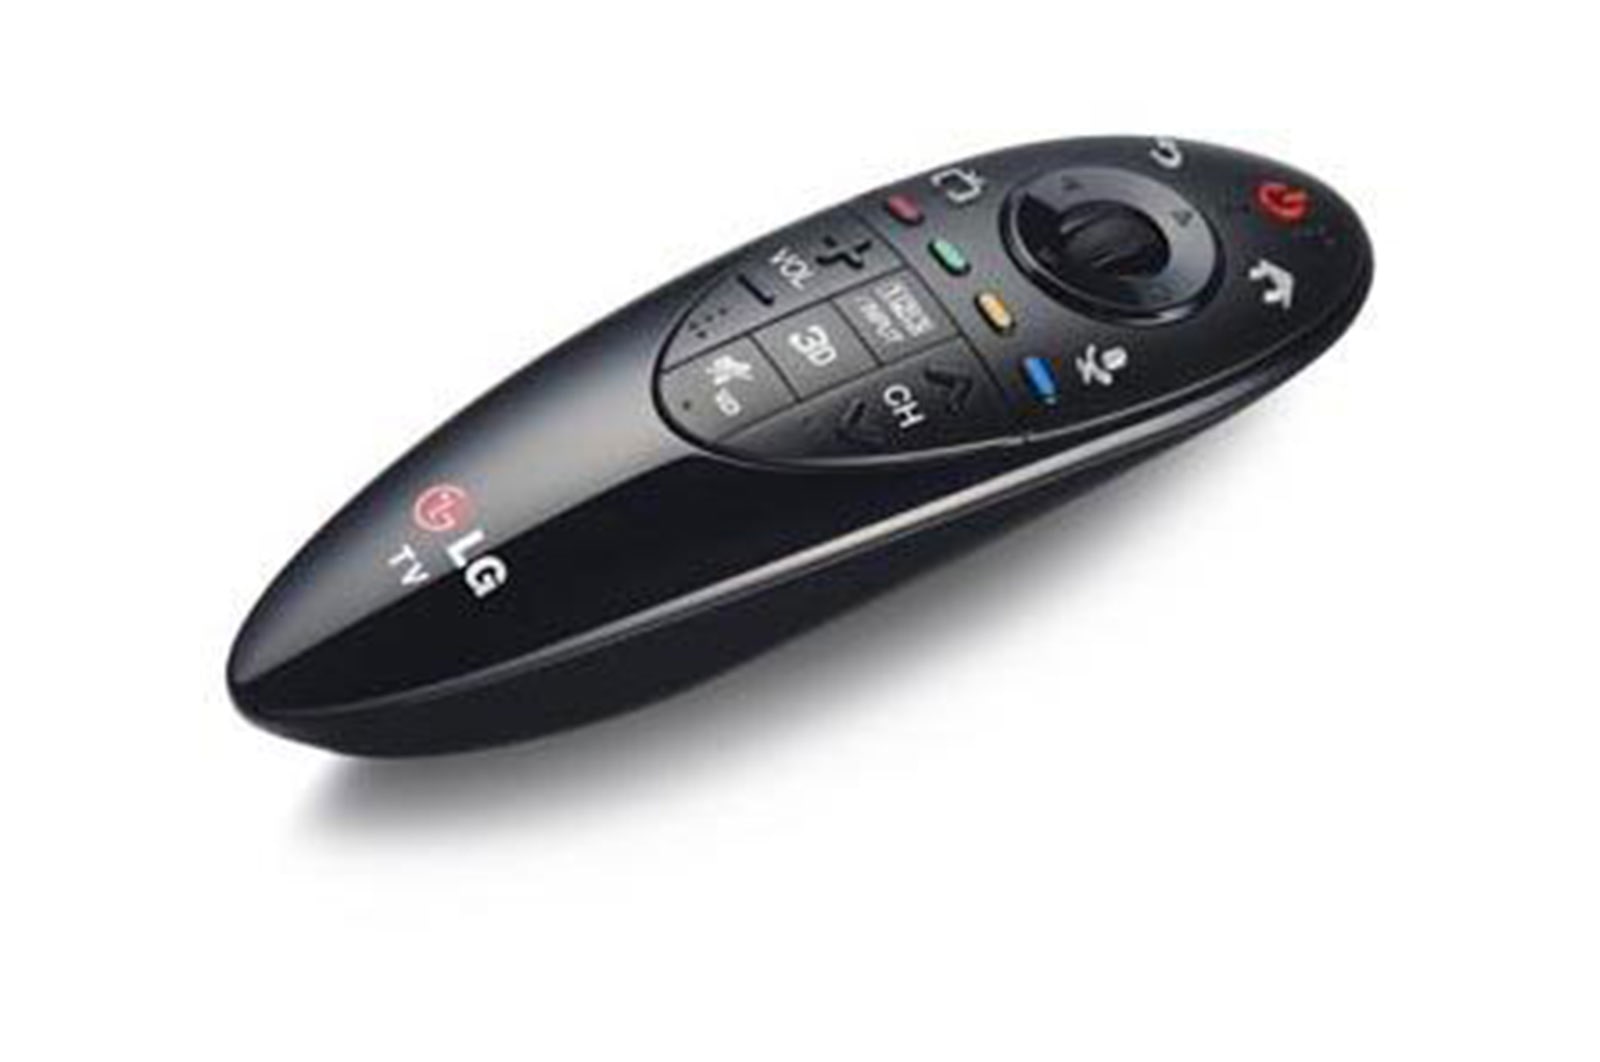 Lg An Mr500 Smart Magic Remote Control For Lg Smart Tvs Lg Usa | Free ...